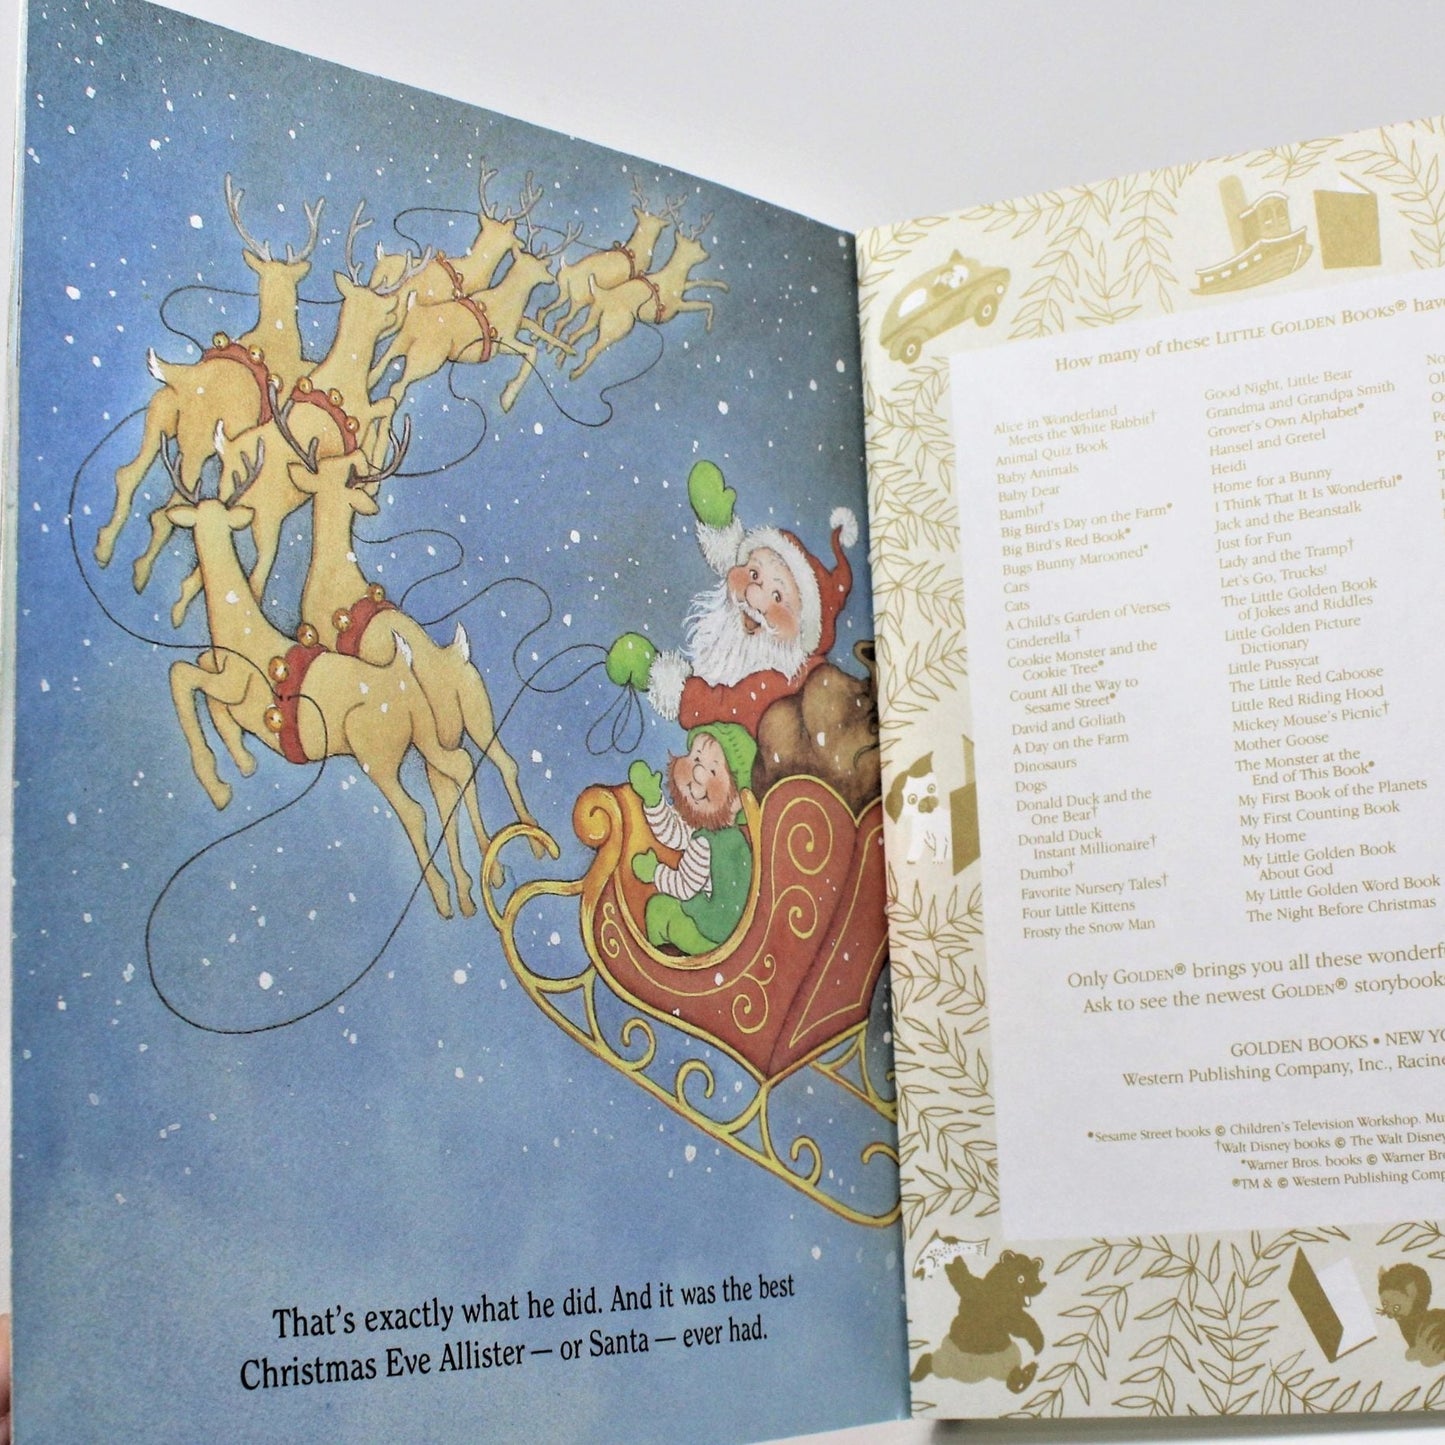 Children's Book, Little Golden Book, The Littlest Christmas Elf, Hardcover, 1987